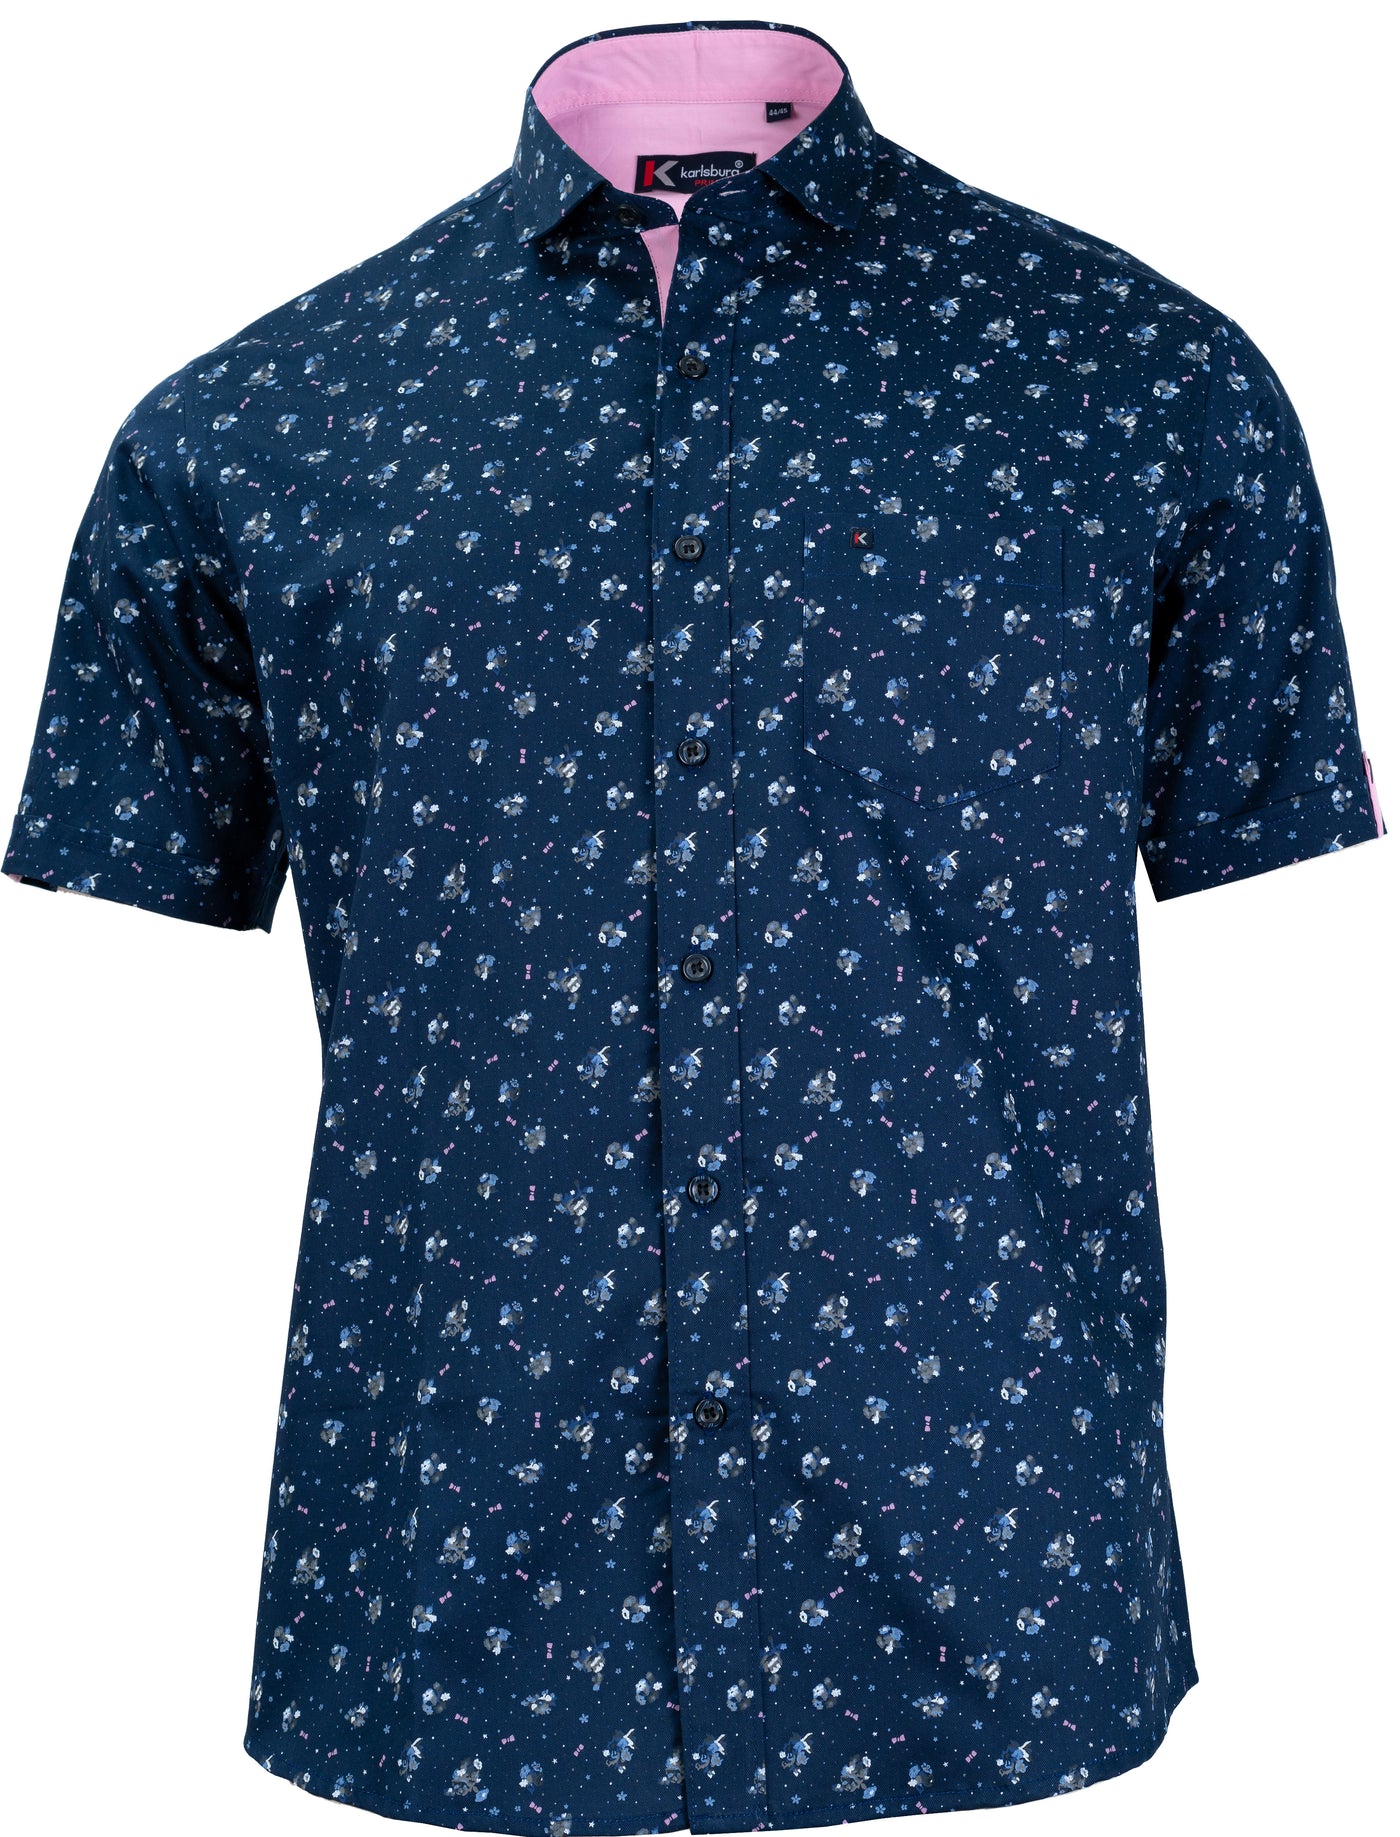 Men's Blue Floral Printed Shirt